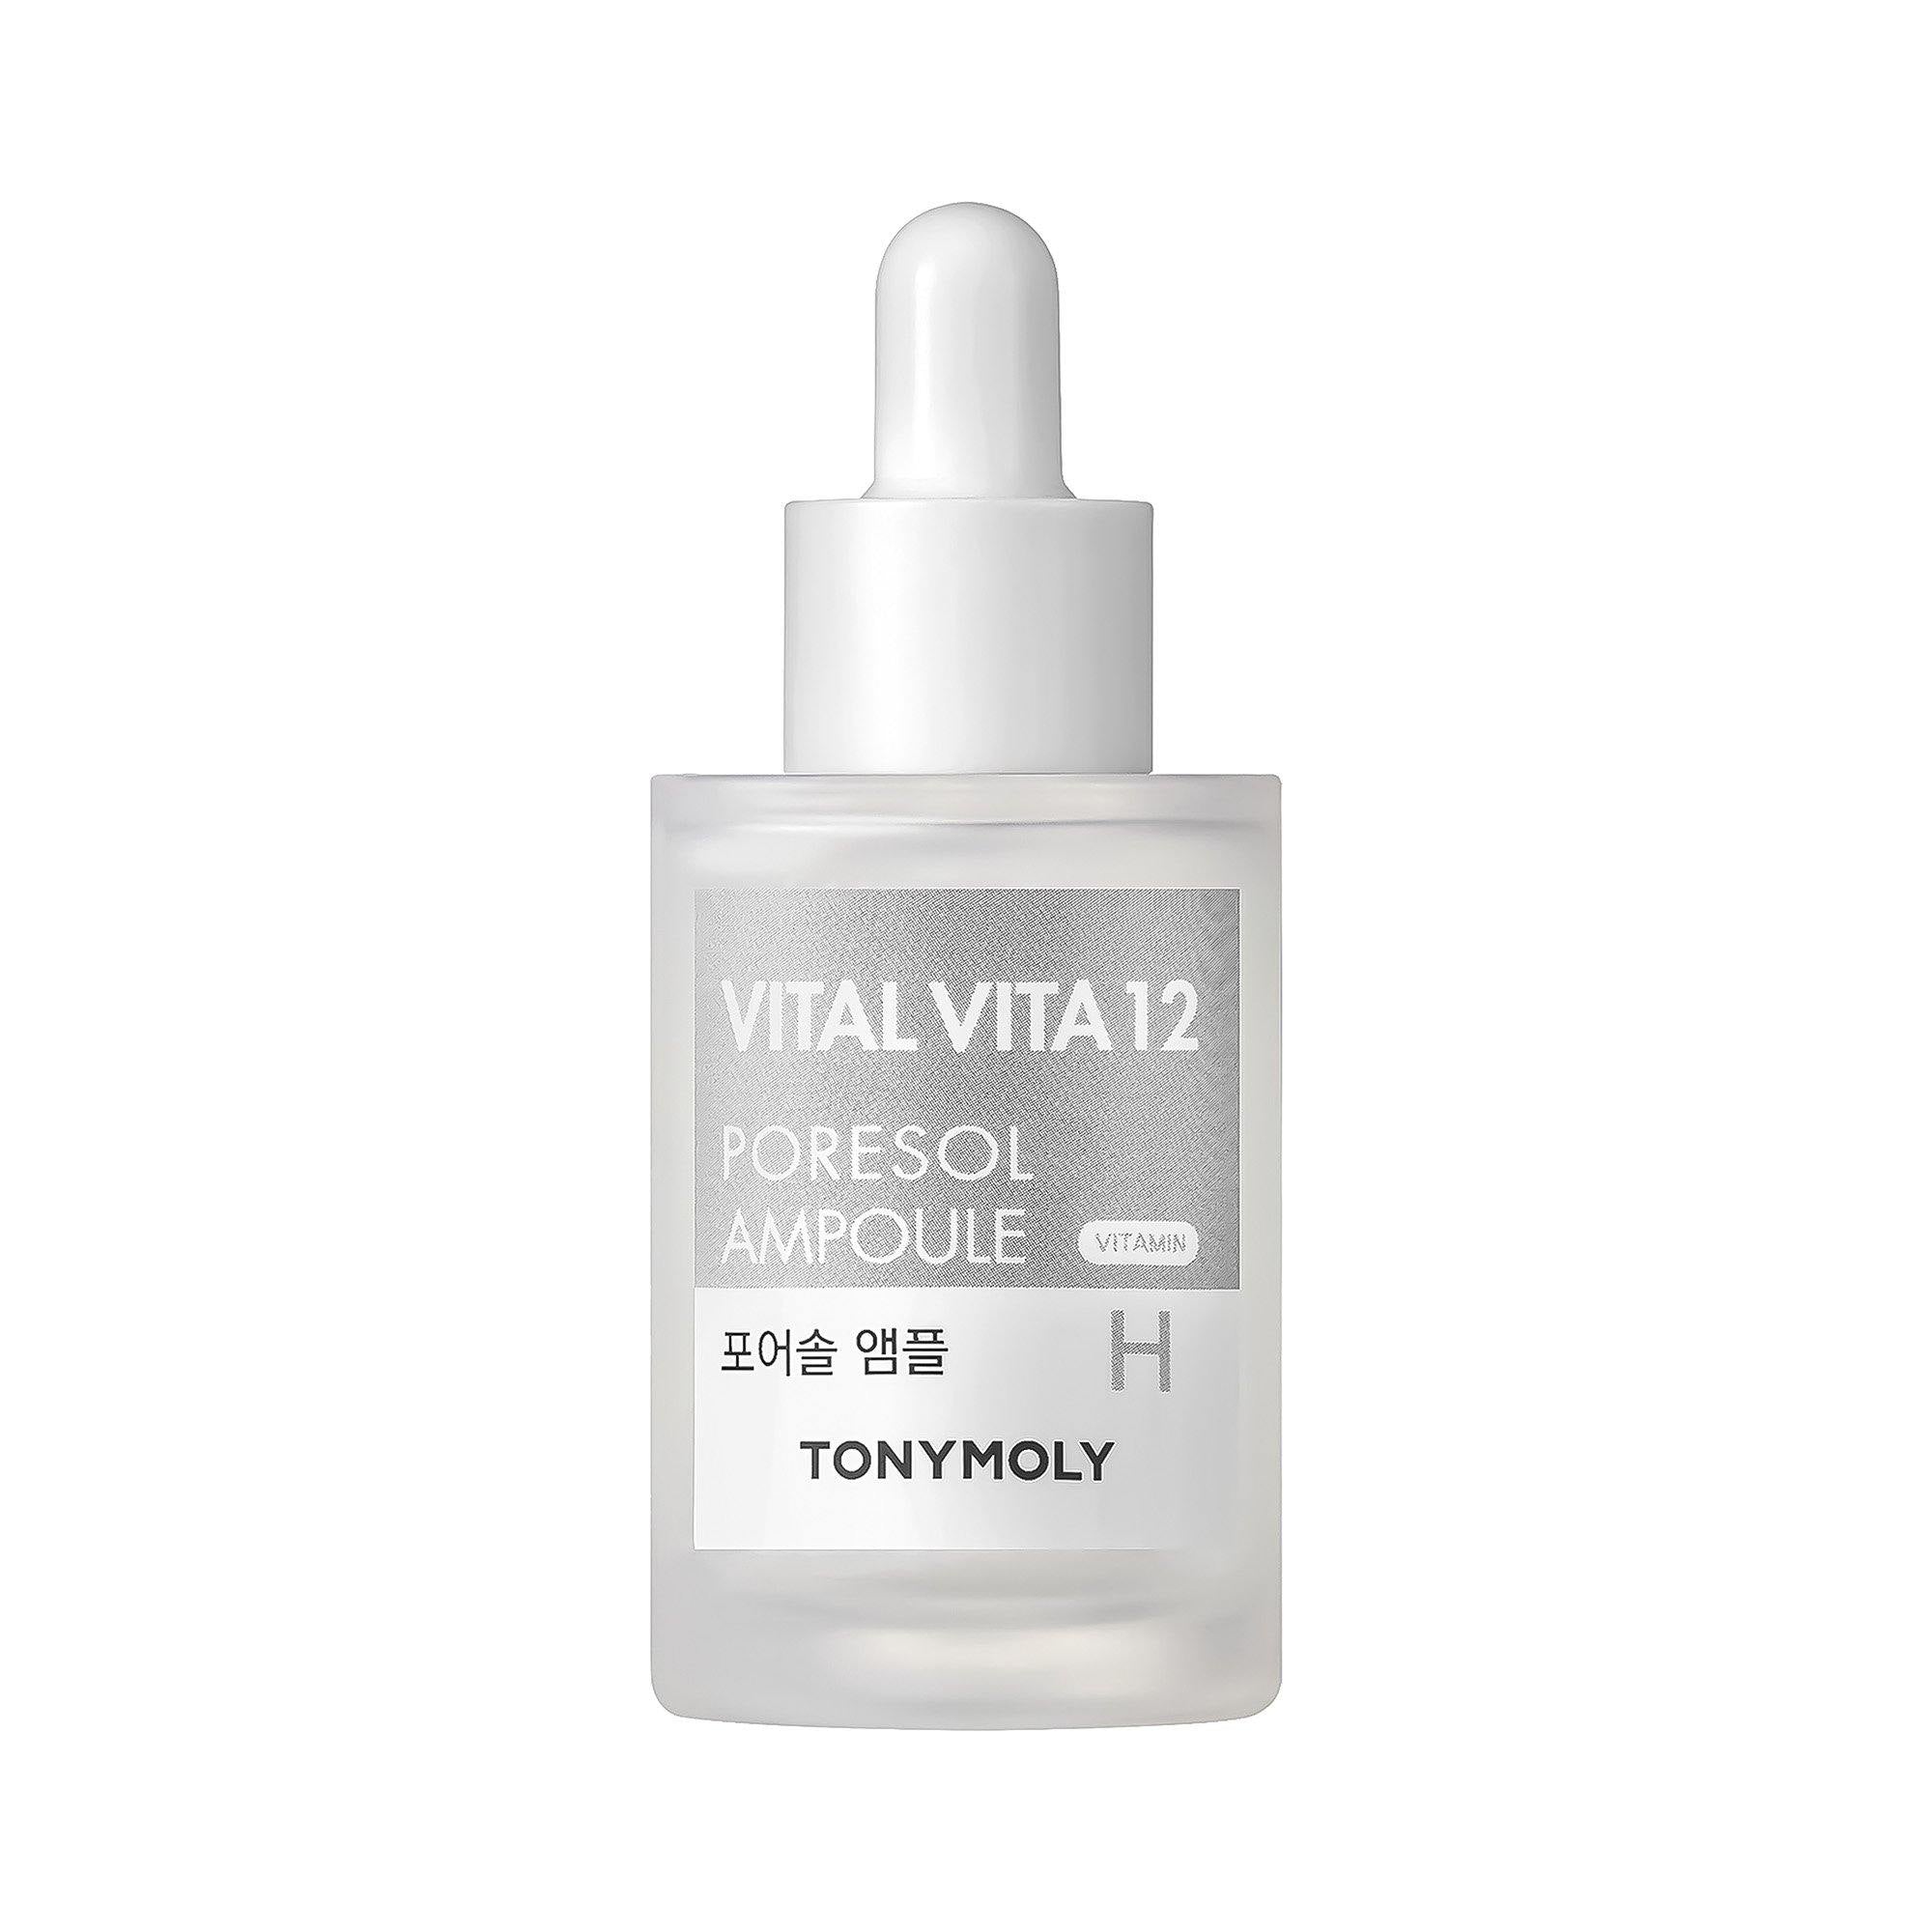 TONYMOLY Vital Vita 12 - Pore Care Ampoule 30ml - TONYMOLY OFFICIAL